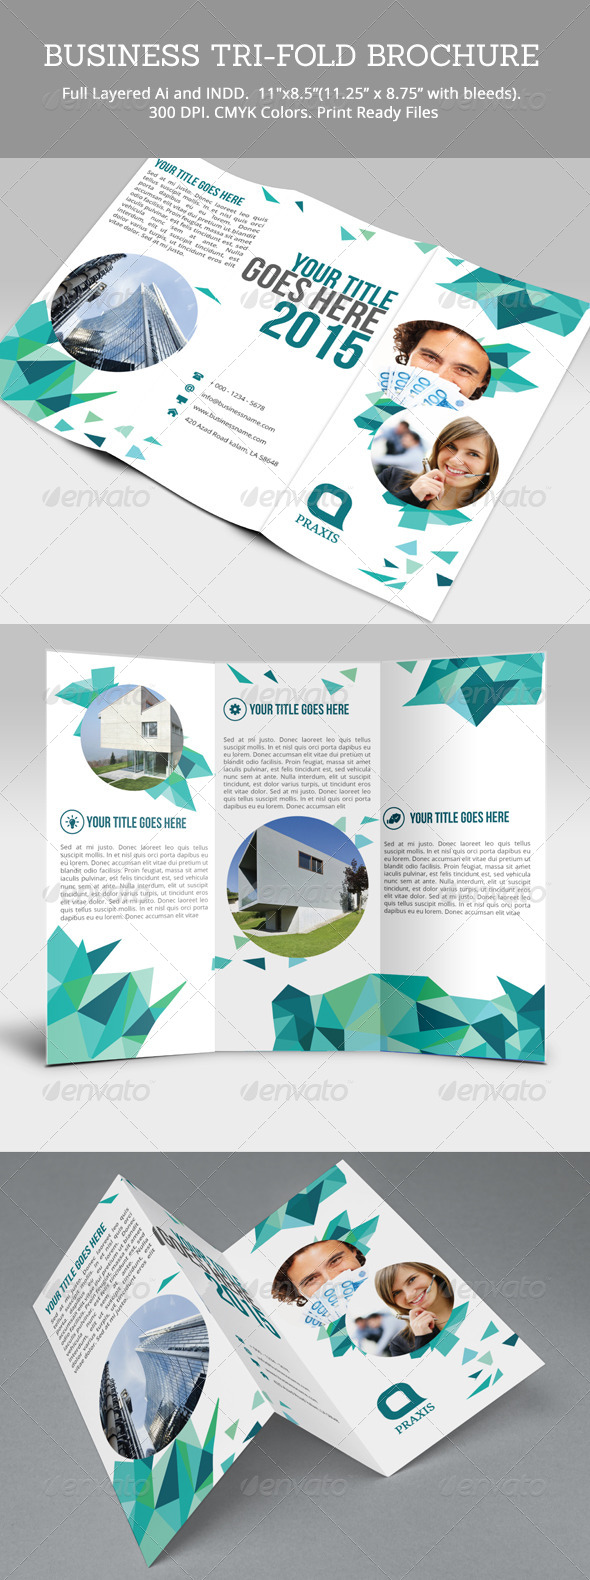 Business Tri-Fold Brochure (Corporate)